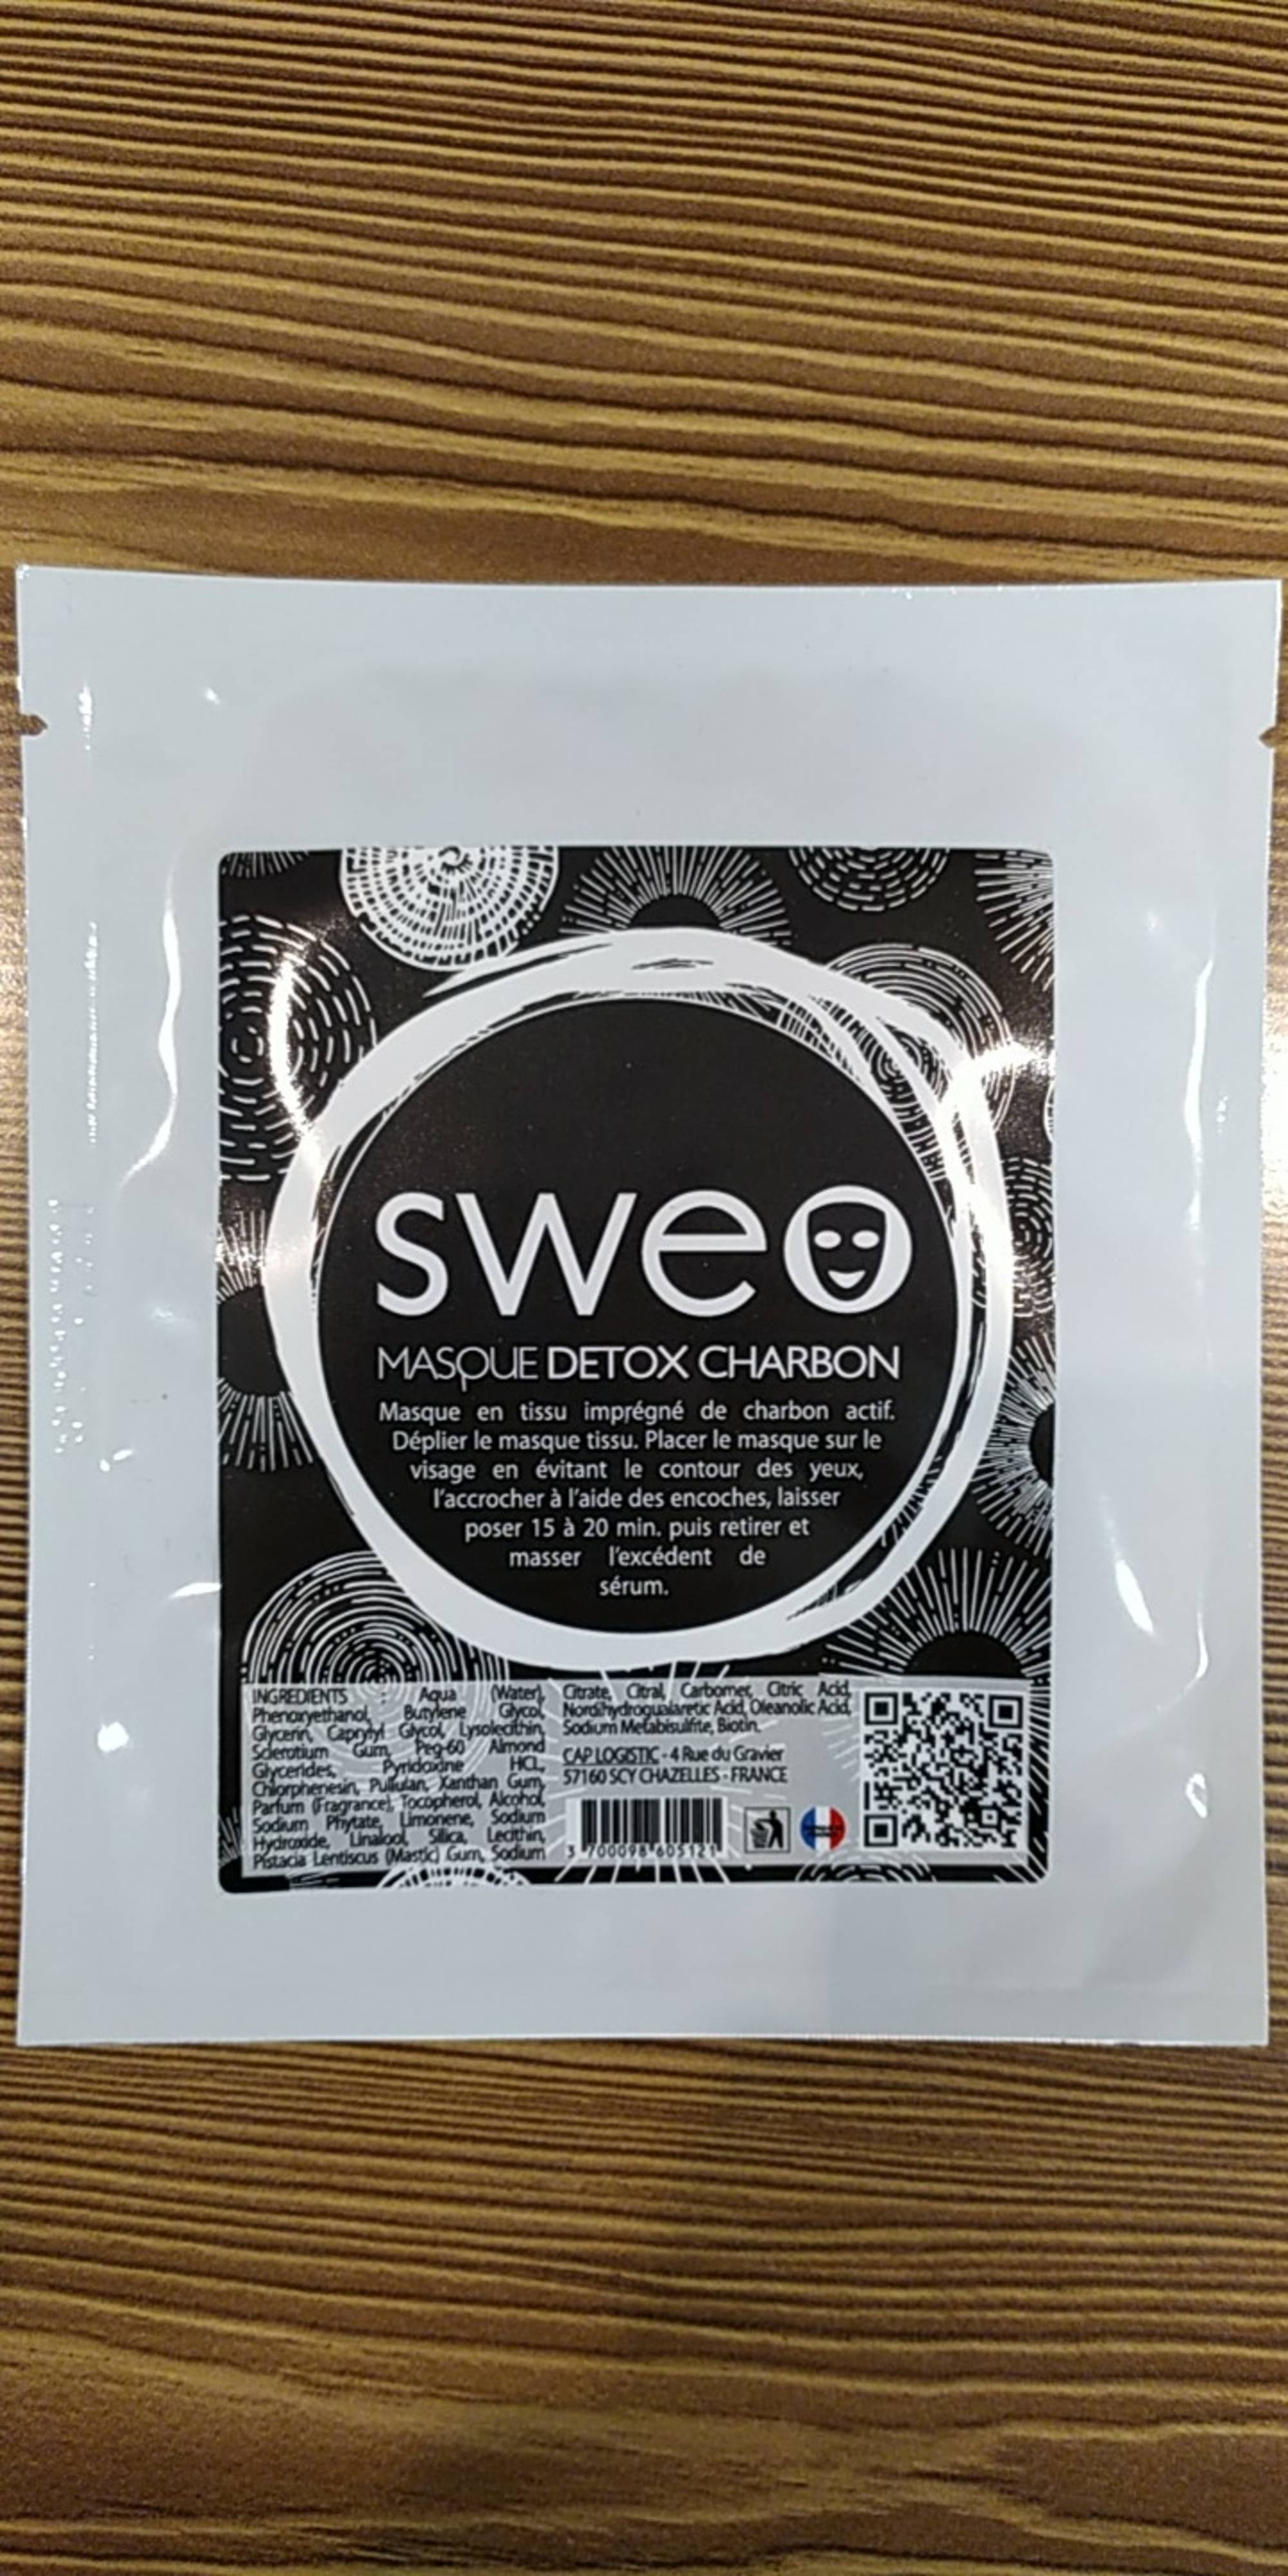 SWEO - Masque detox charbon